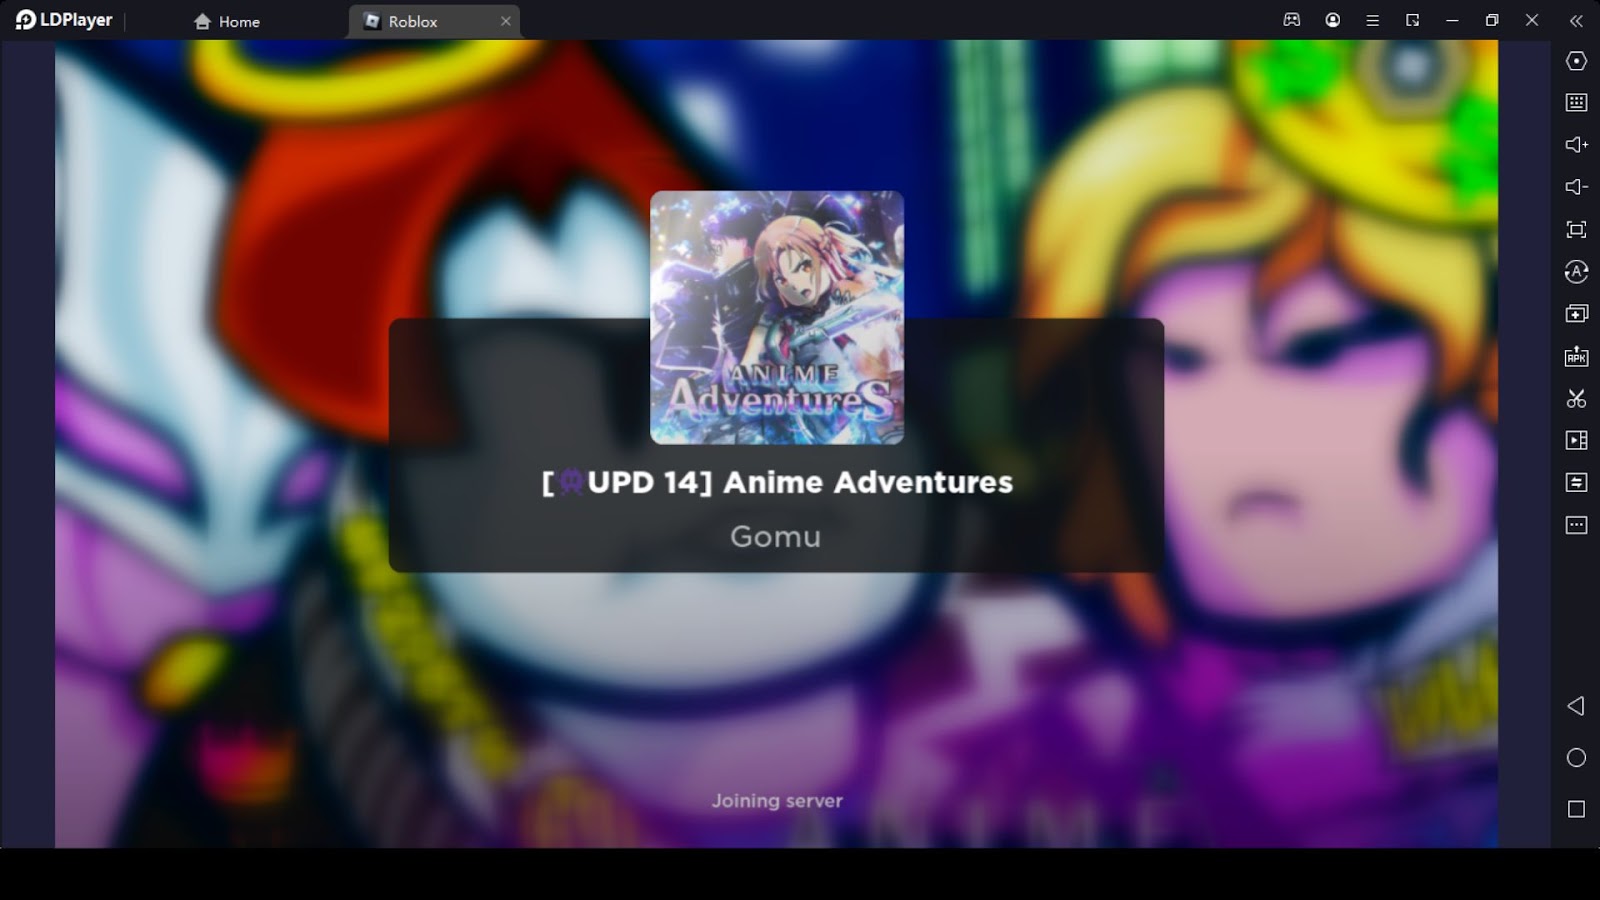 Anime Adventures Codes Guide - Unlock Gems and Summon Tickets-Redeem Code -LDPlayer